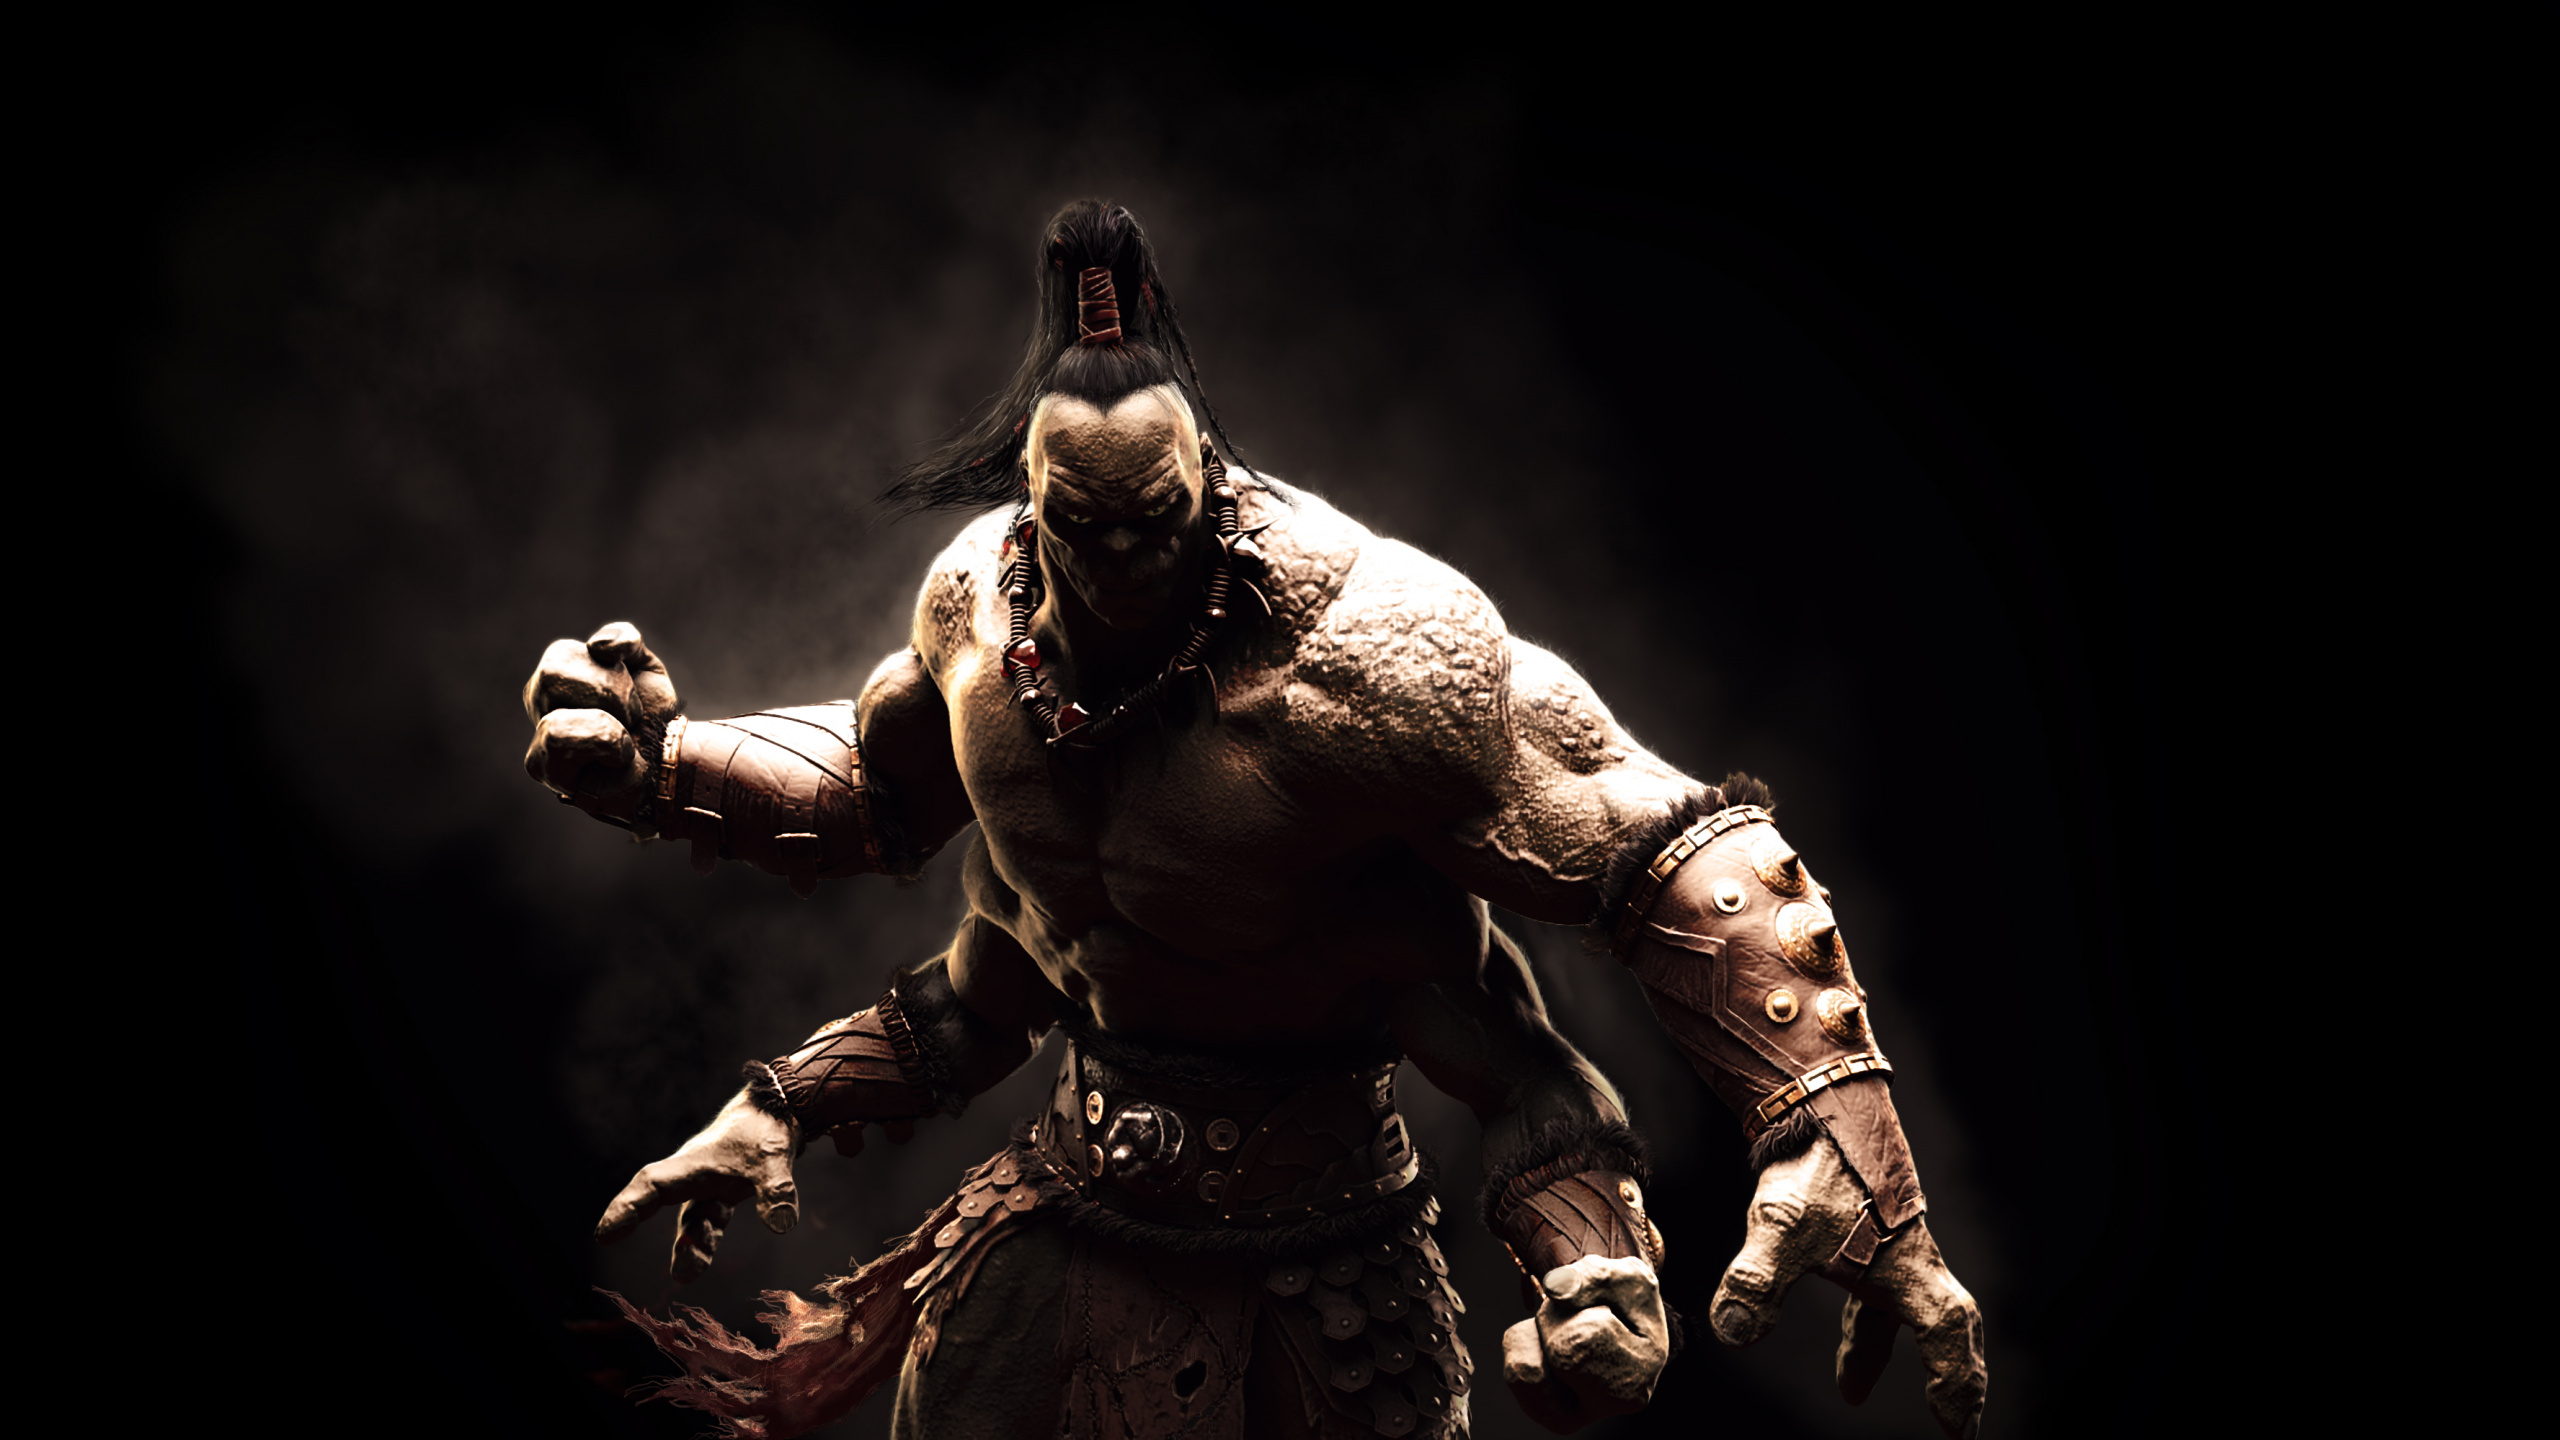 Mortal Kombat x, Goro, Fighting Game, Action Figure, Darkness. Wallpaper in 2560x1440 Resolution